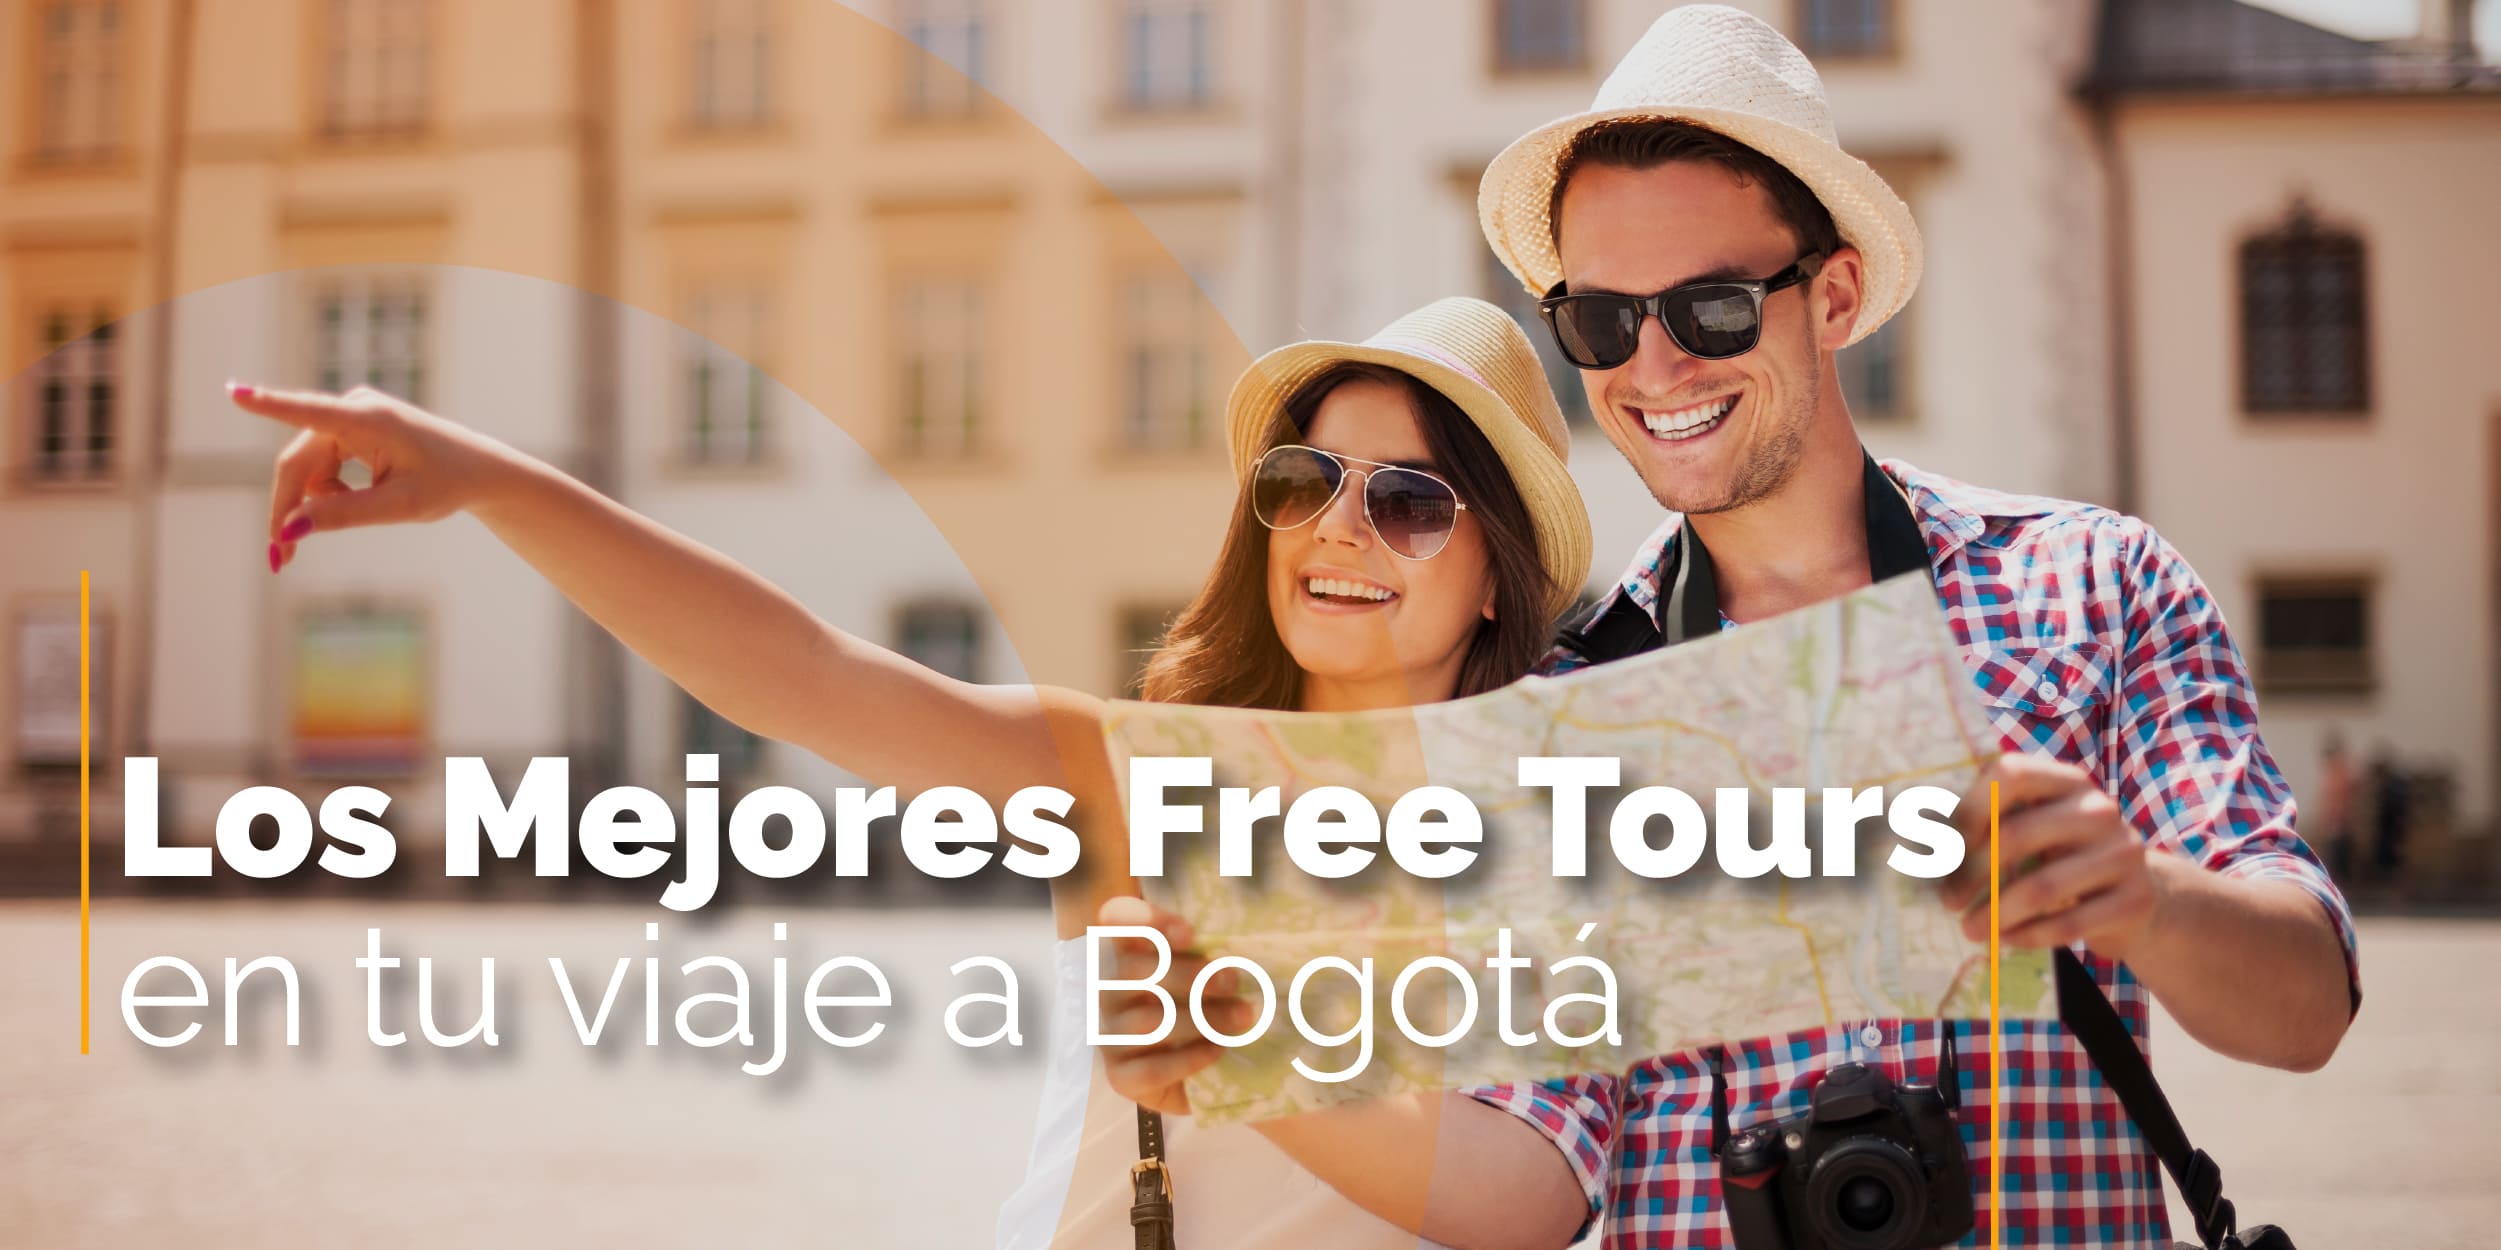 Los Mejores Free Tours en tu viaje a Bogotá